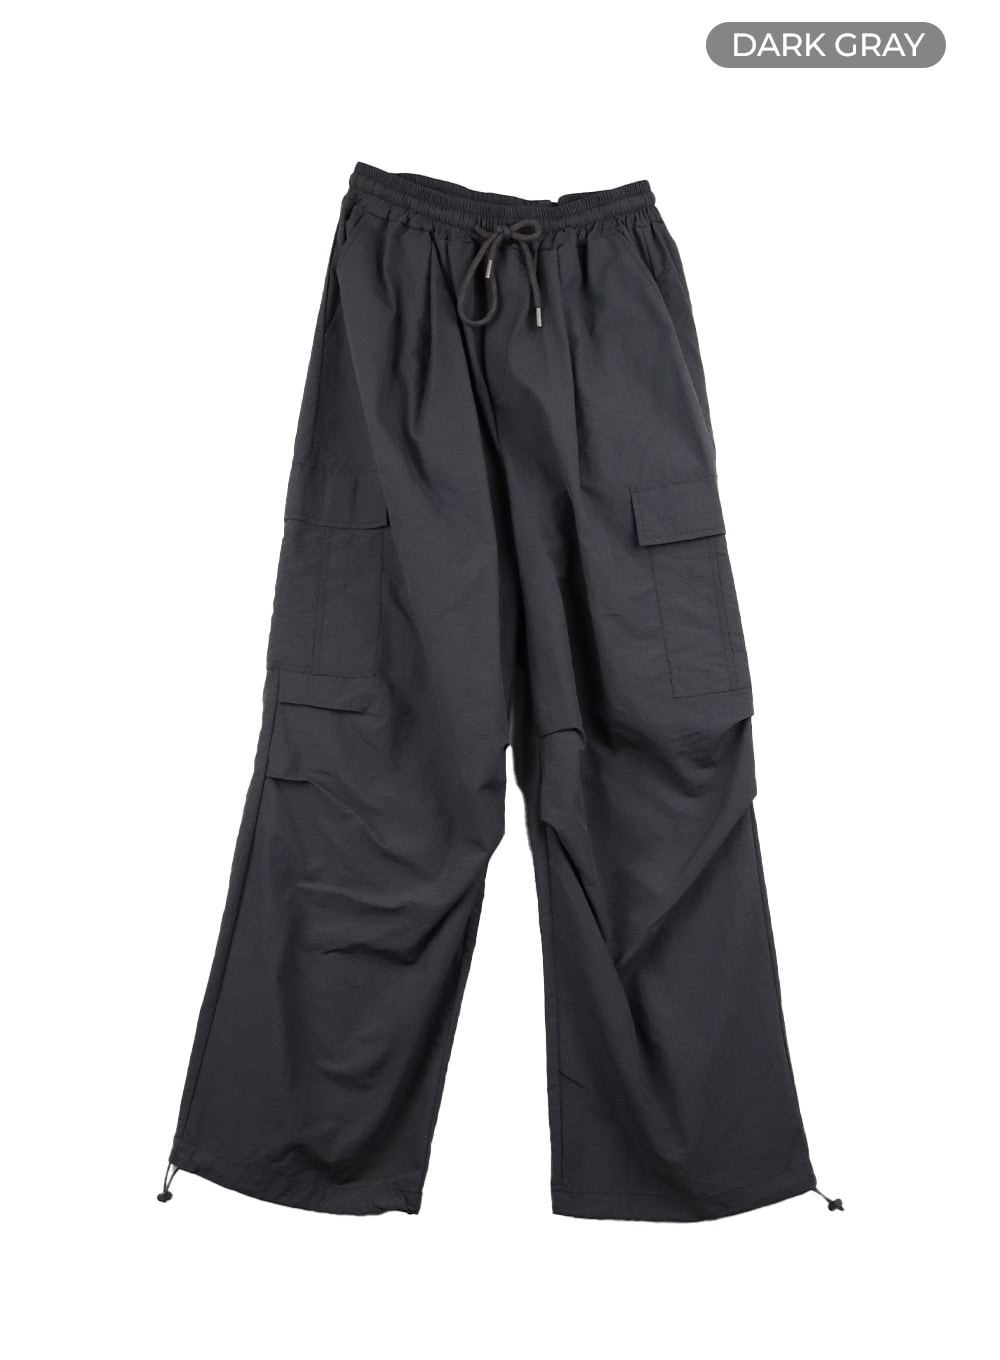 mens-wide-fit-parachute-pants-iy402 / Dark gray